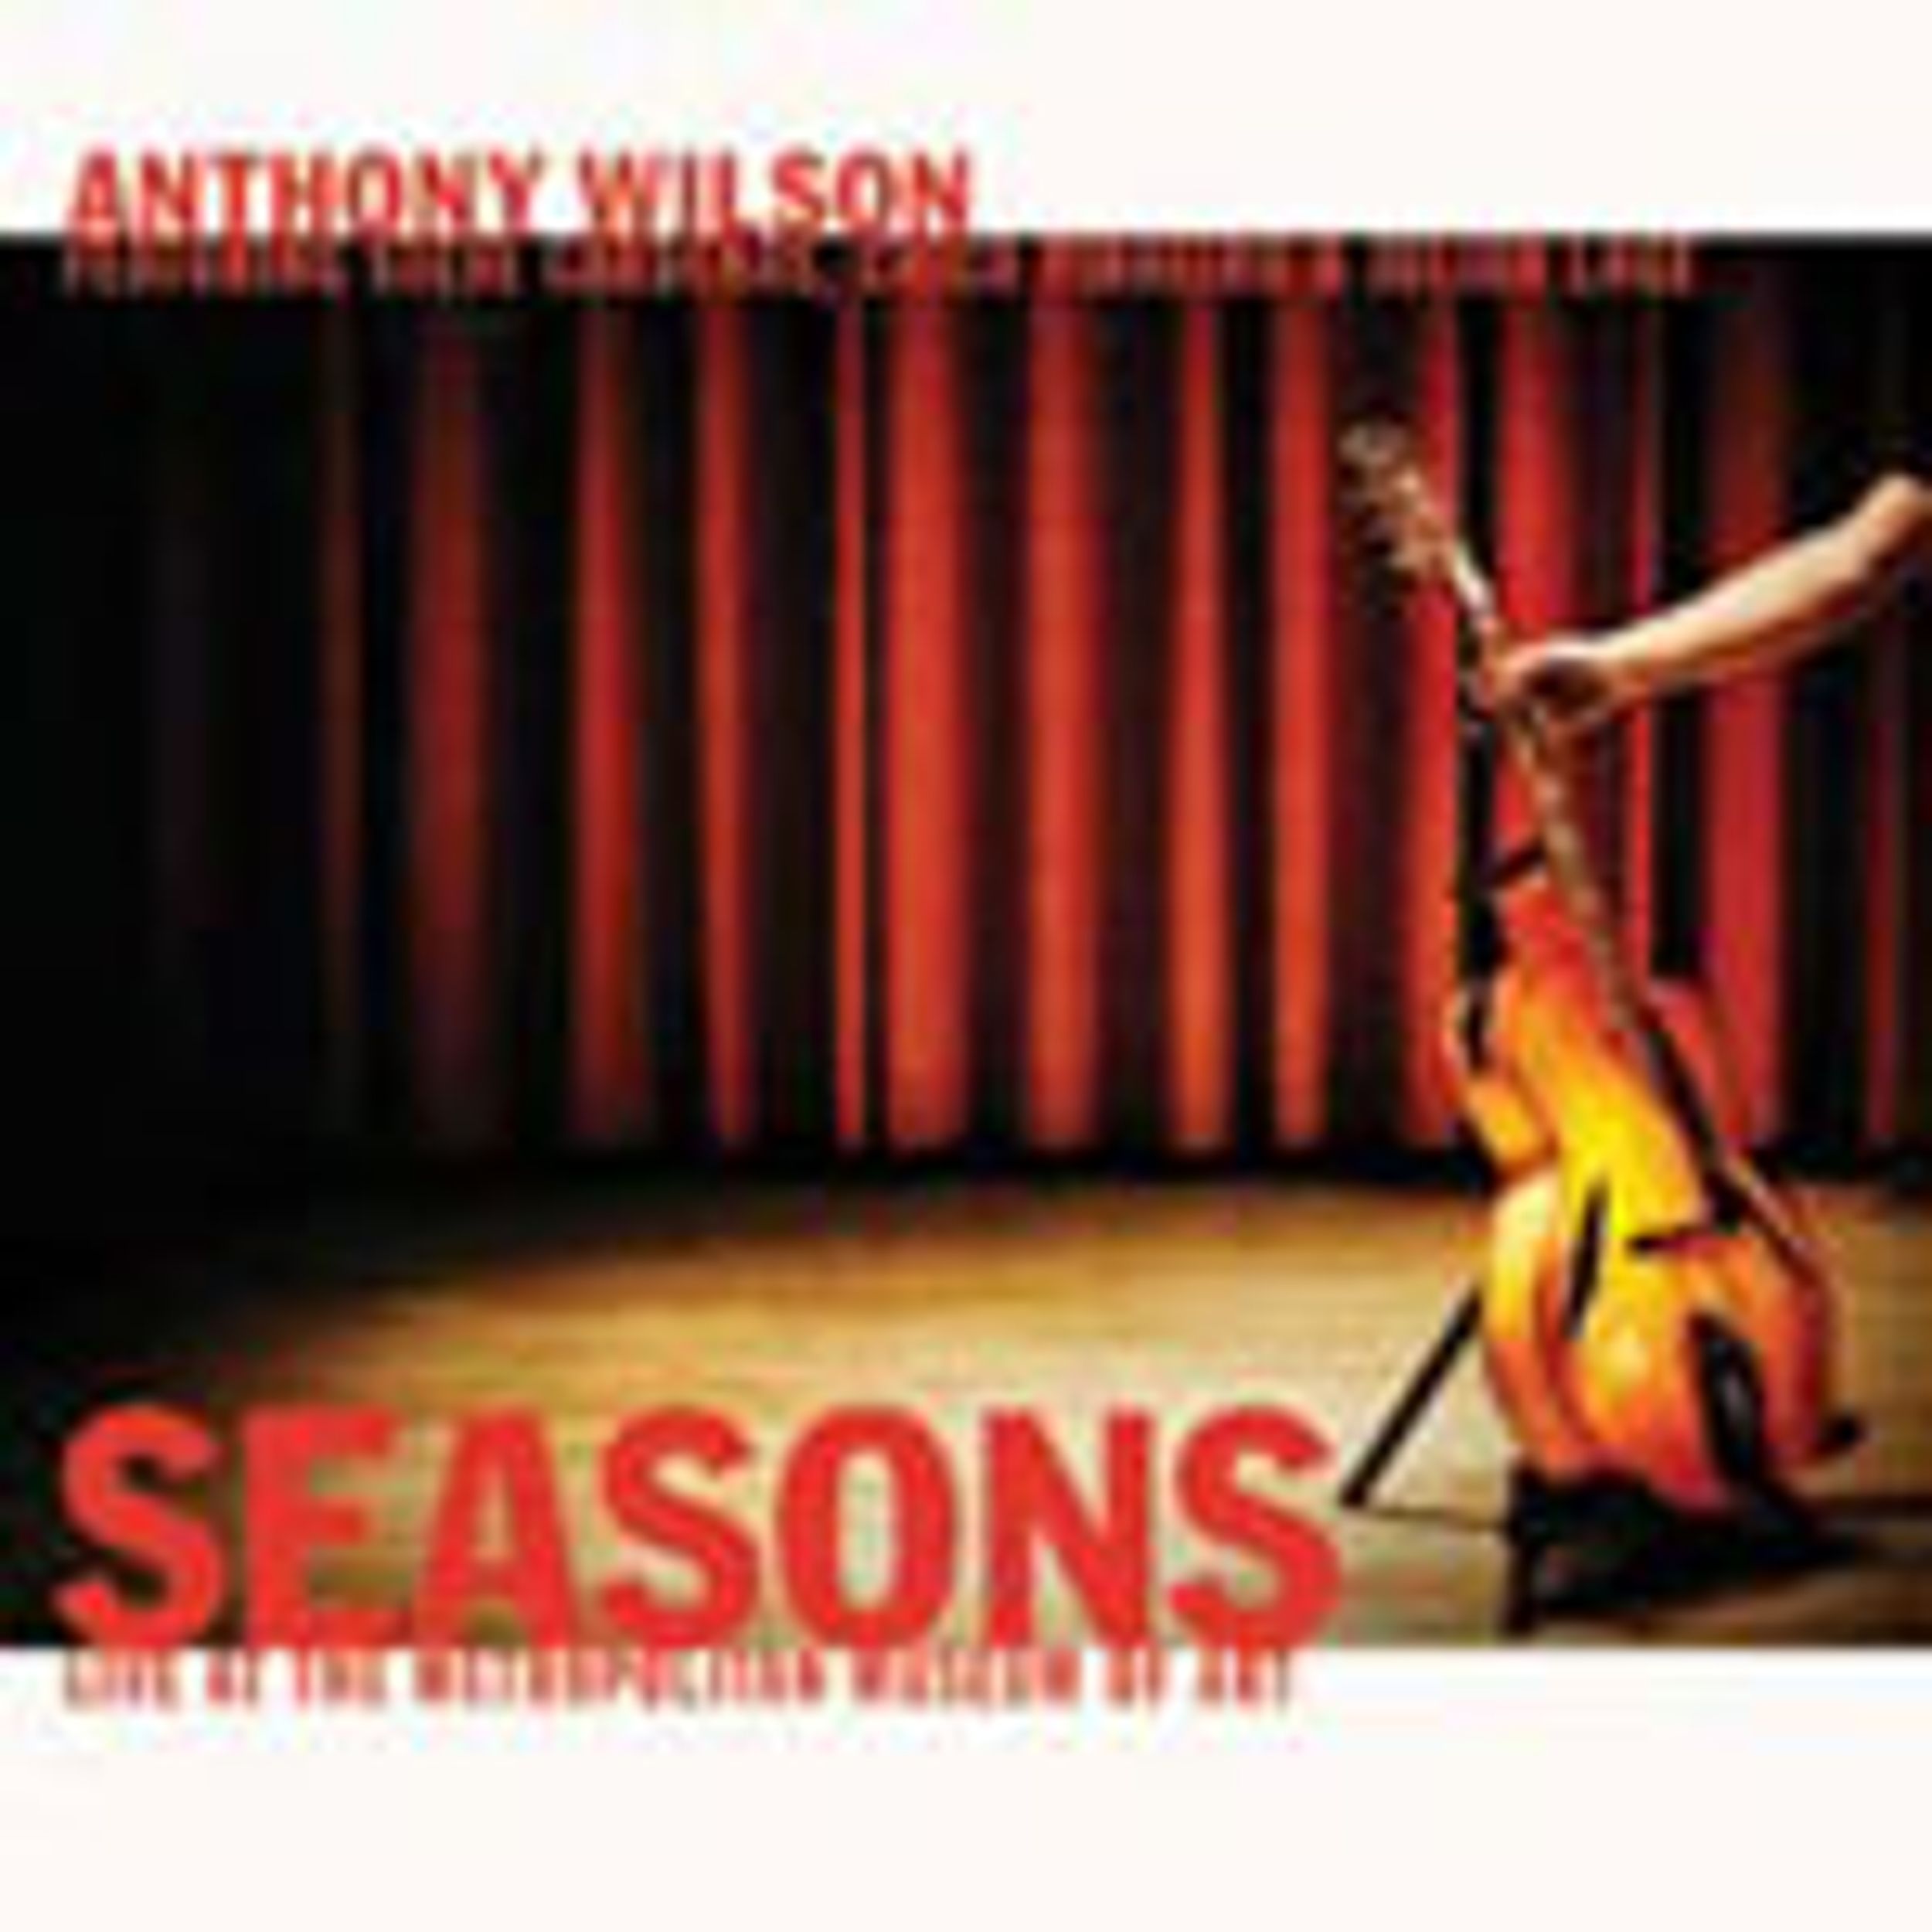 Album/DVD Review: Anthony Wilson - Seasons, Live at the Metropolitan Museum of Art